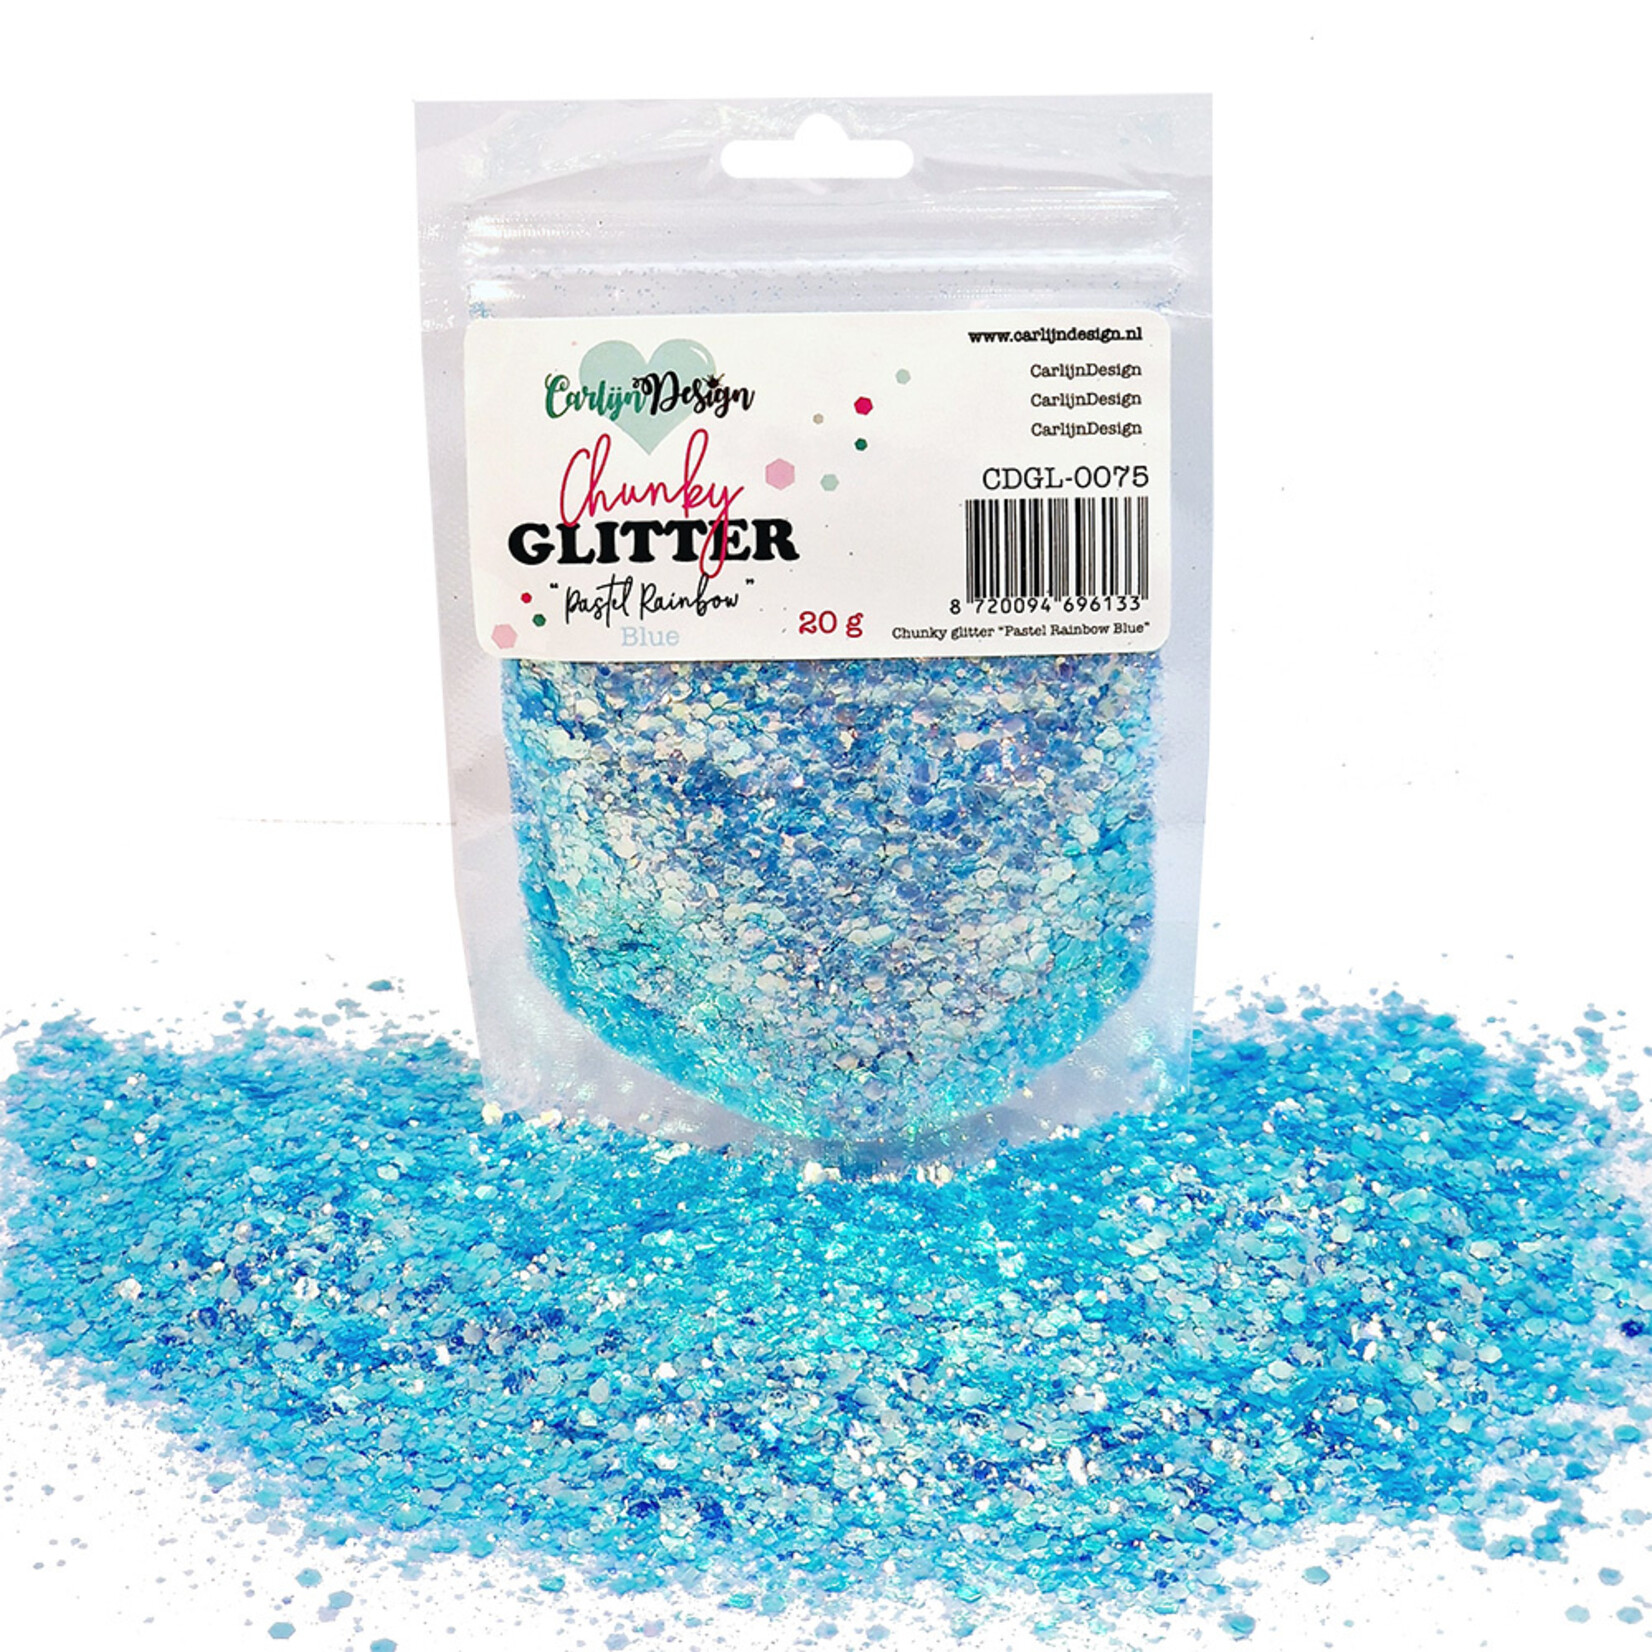 CarlijnDesign Chunky glitter COMBO PACK 11 Spring 8x